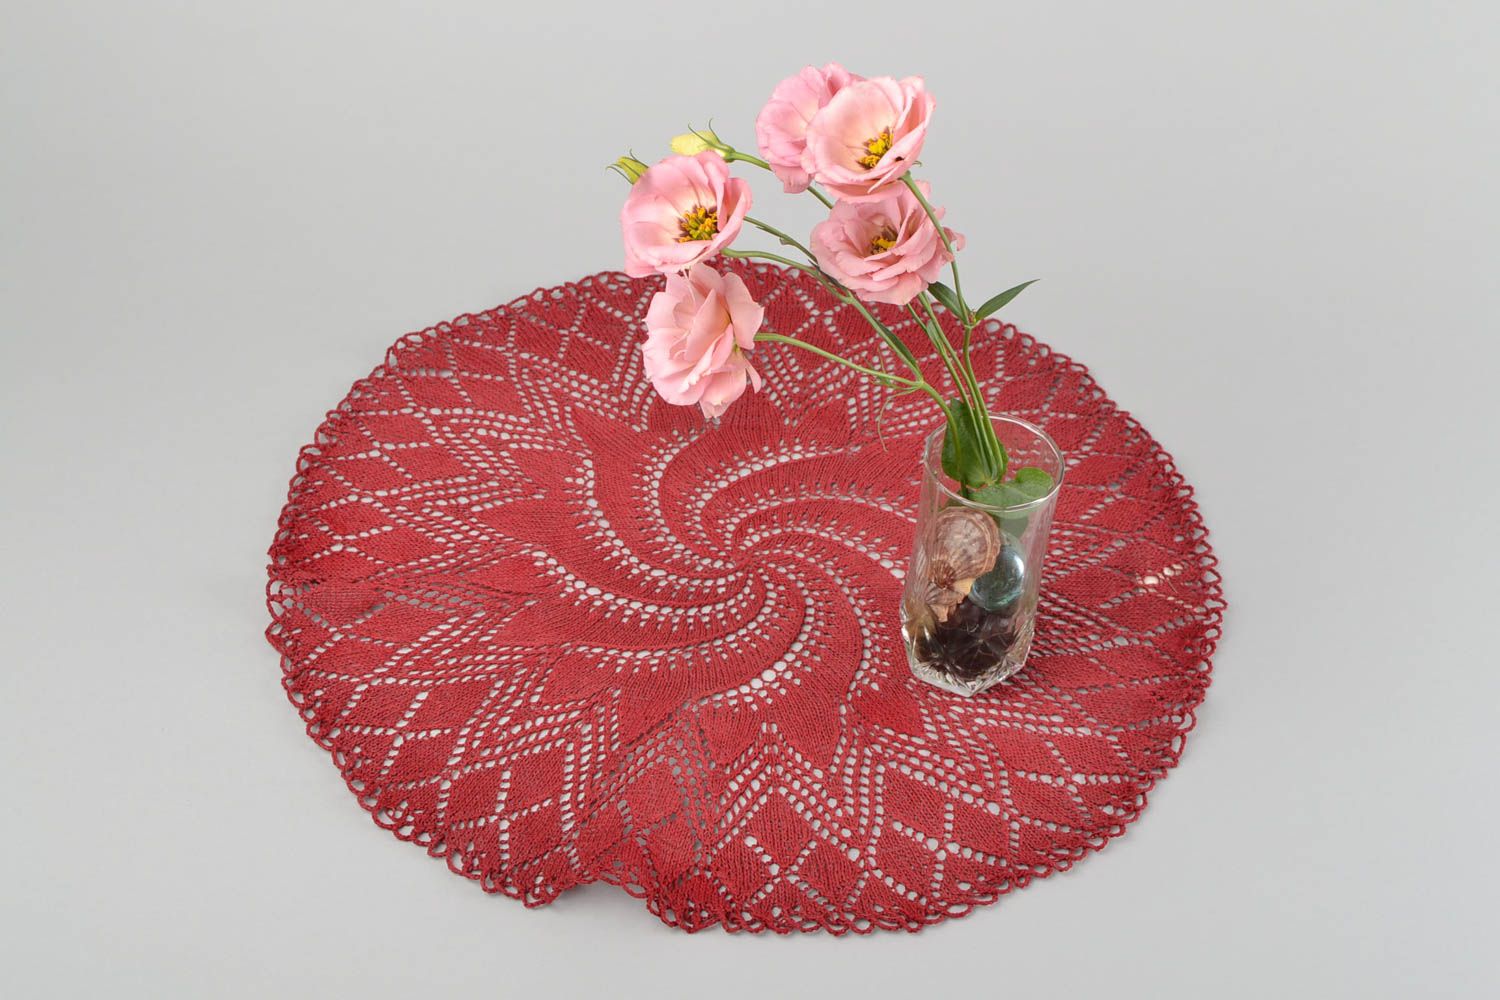 Handmade fabric napkin knitted napkin for table home textiles decor ideas photo 1